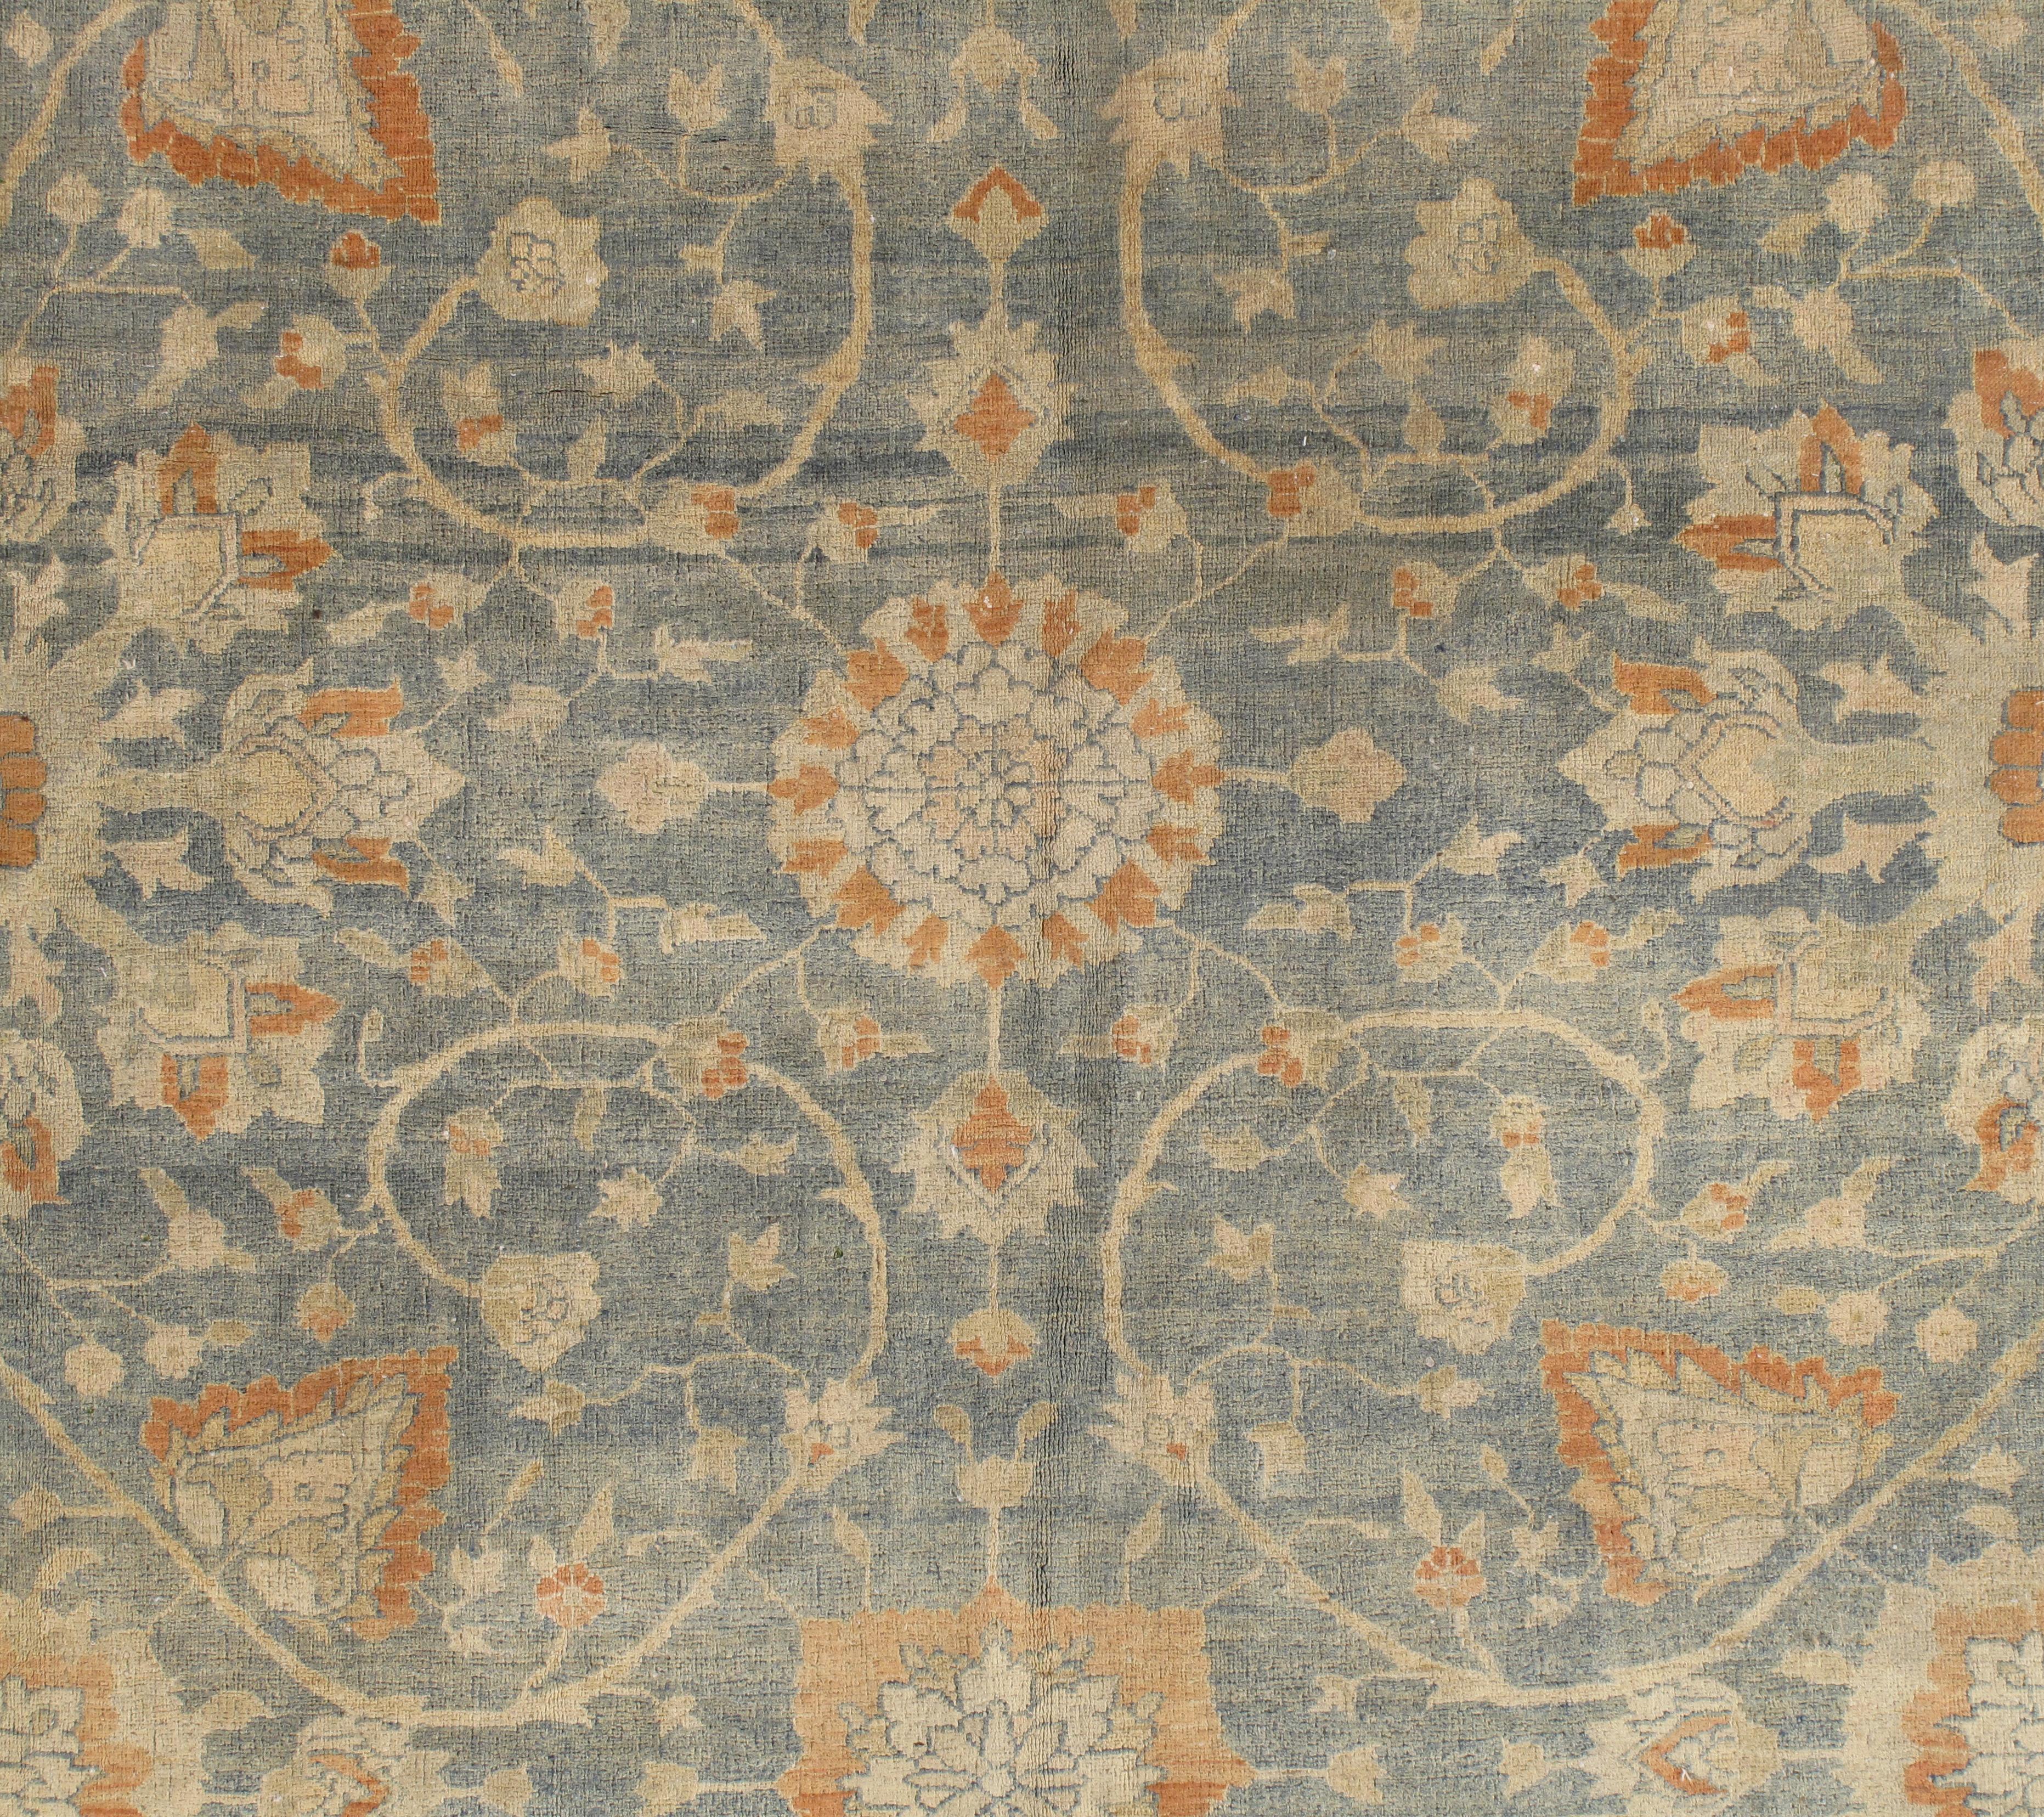 Antique Tabriz Carpet, Handmade Carpet, Light Blue, Soft Saffron and Ivory In Excellent Condition For Sale In Port Washington, NY